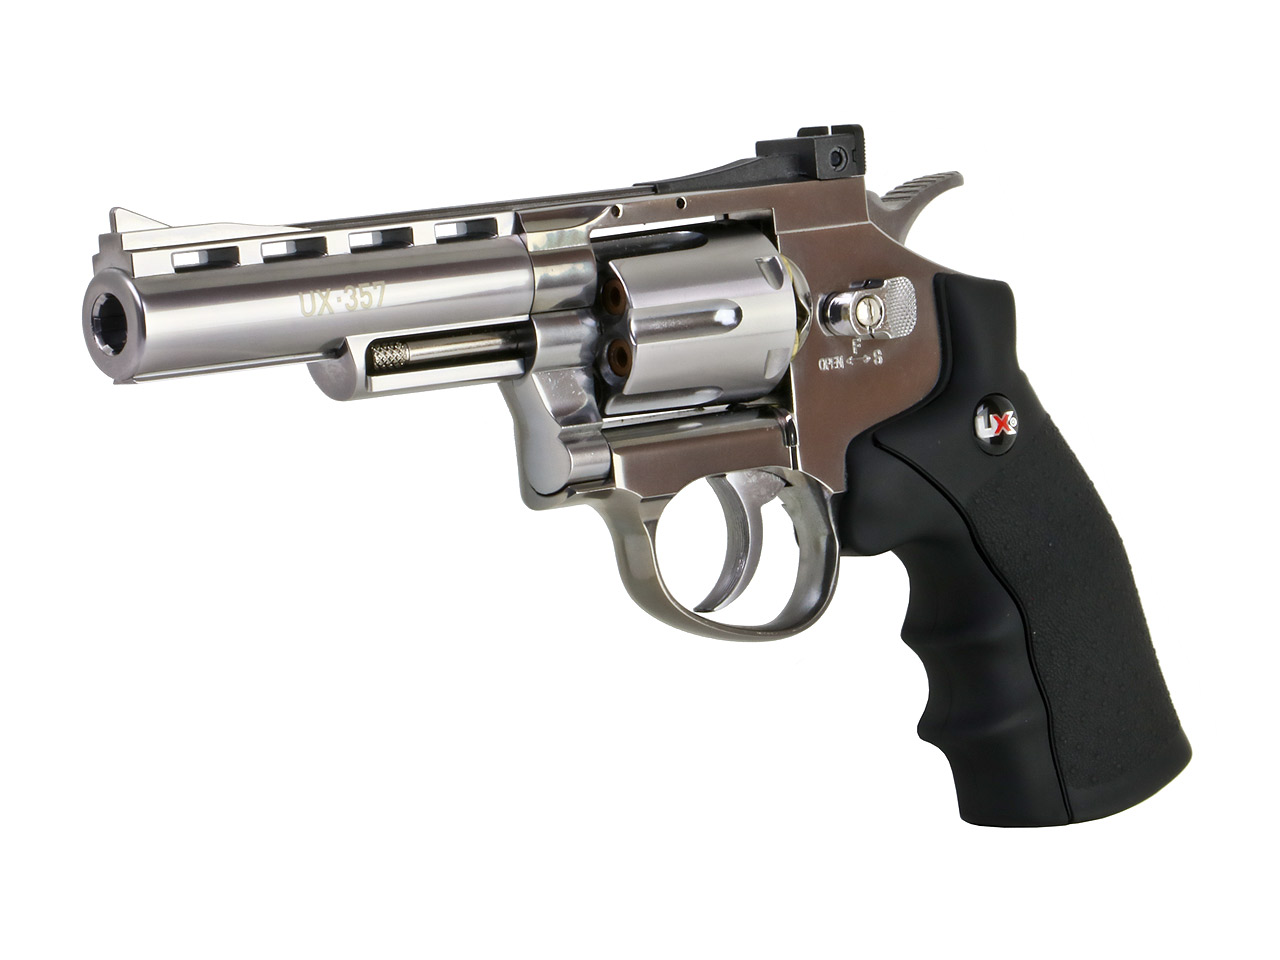 CO2 Revolver UX 357 Vollmetall nickel 4 Zoll Lauf Kunststoffgriffschalen Kaliber 4,5 mm BB (P18)